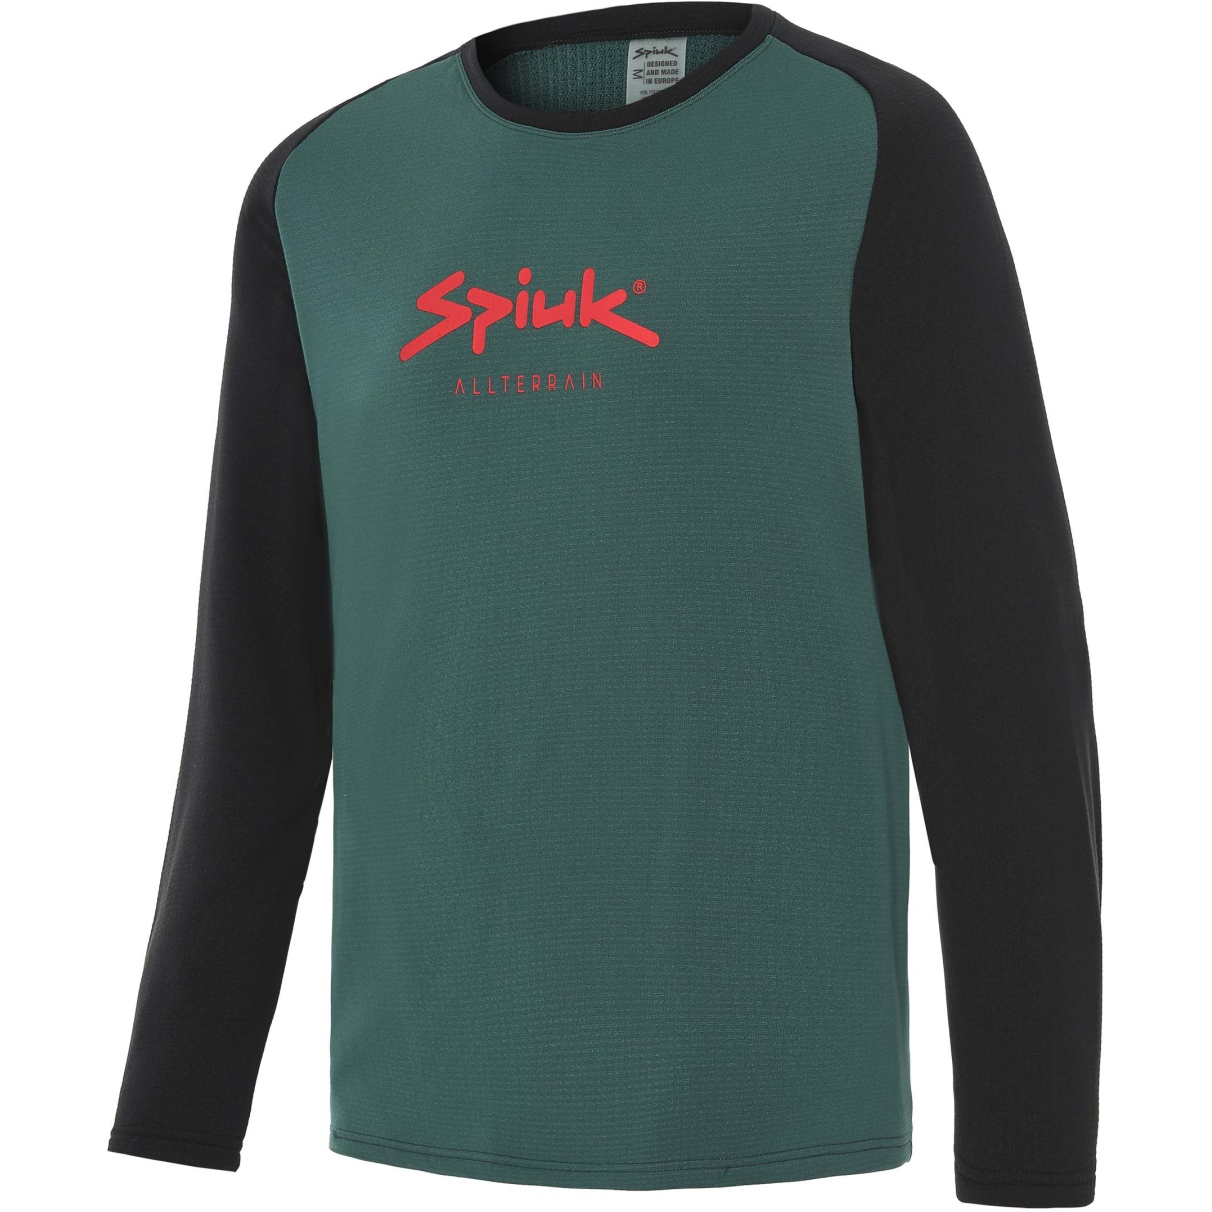 Image of Spiuk ALL TERRAIN Long Sleeve Jersey Men - green